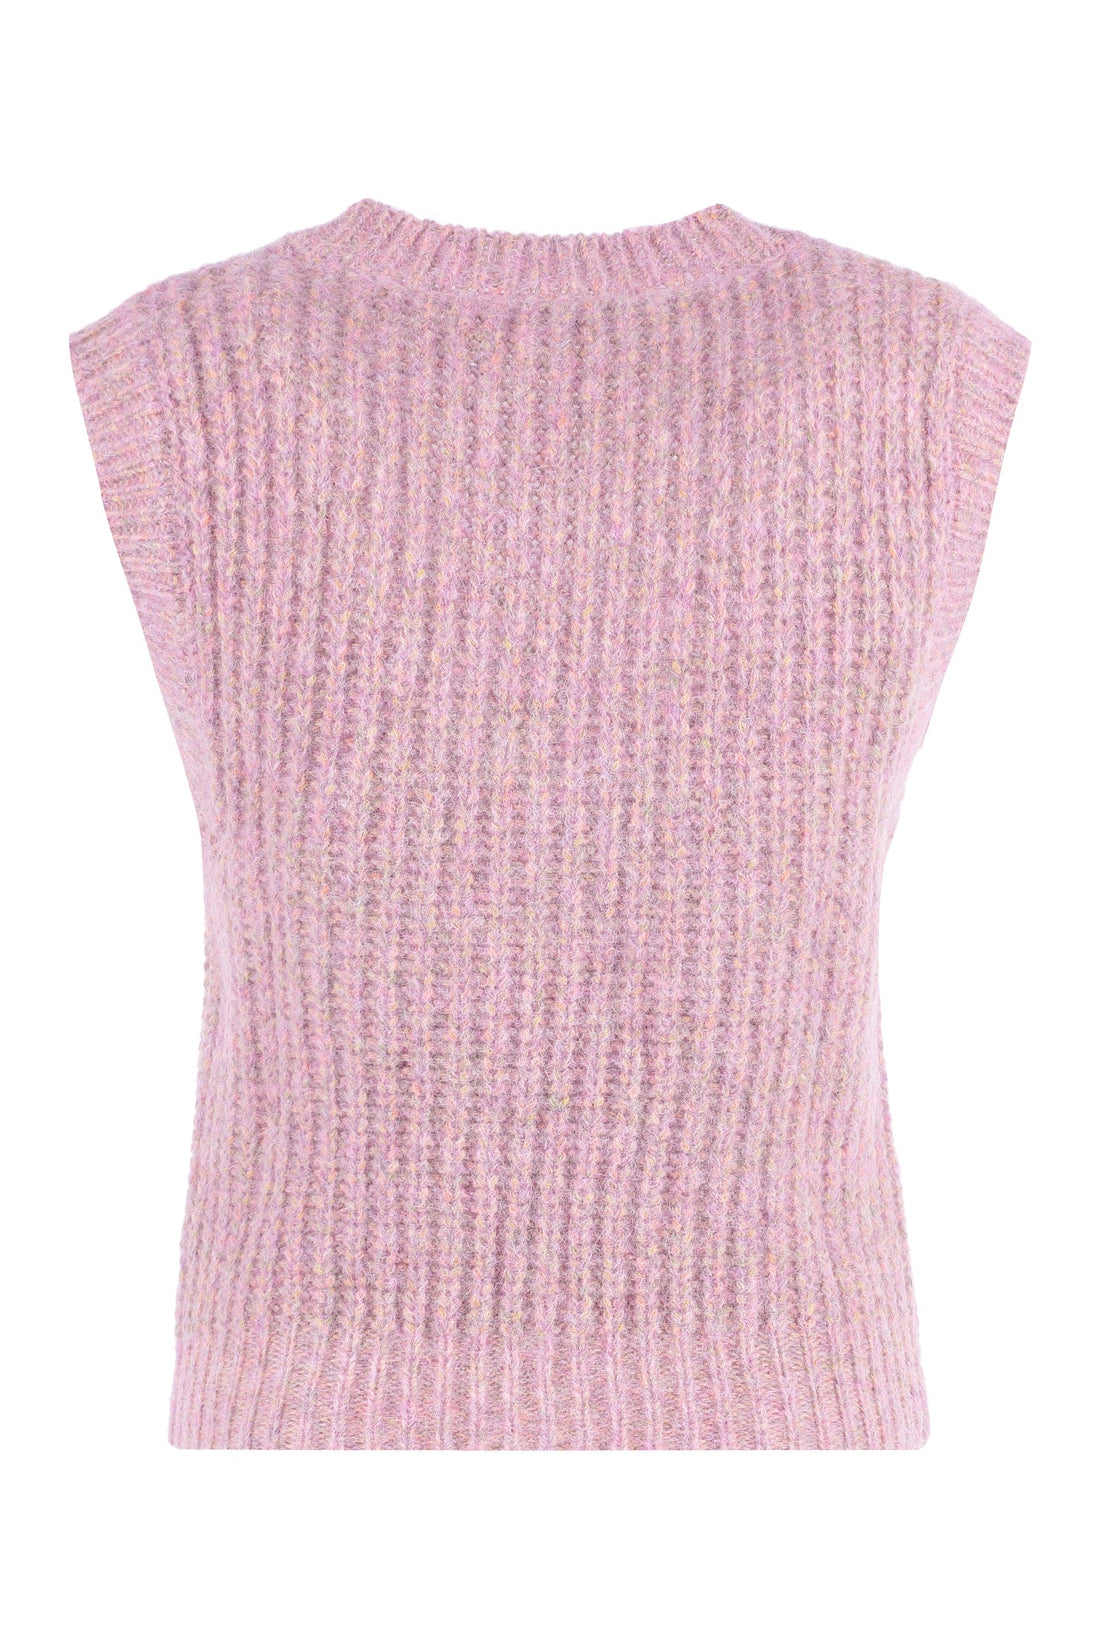 Rodebjer-OUTLET-SALE-Priscilla knitted vest-ARCHIVIST